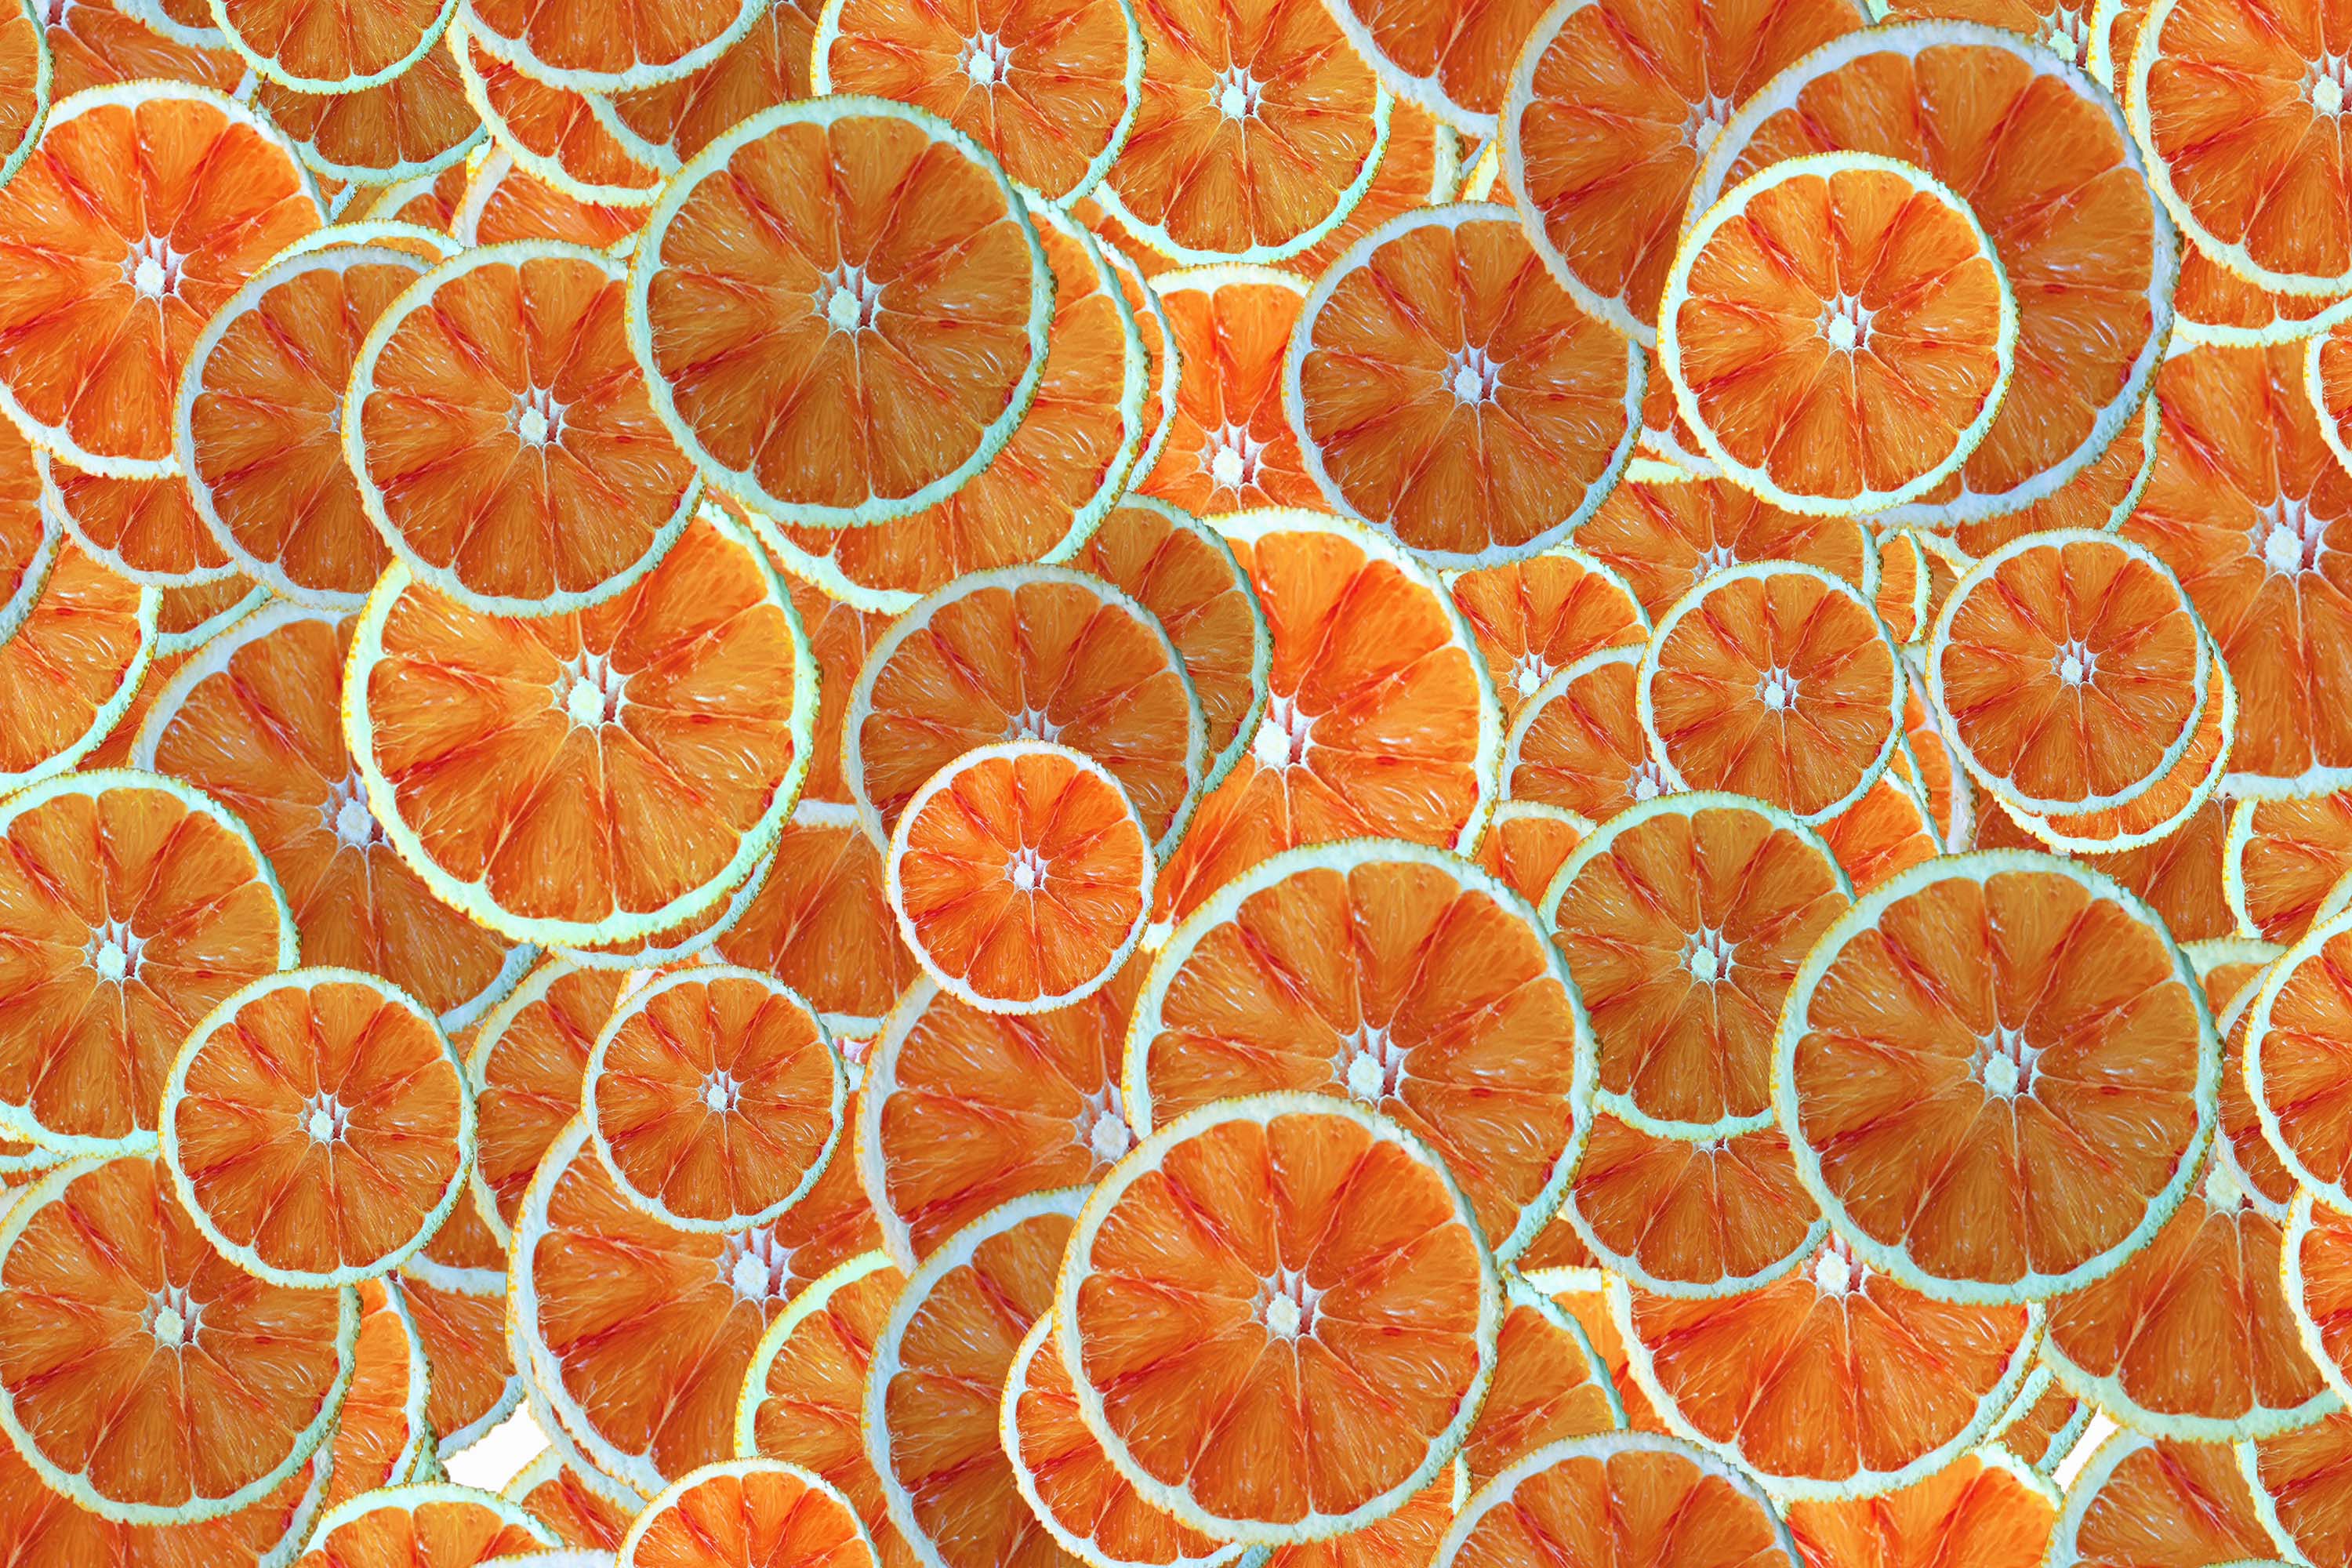 orange fruit wallpaper desktop